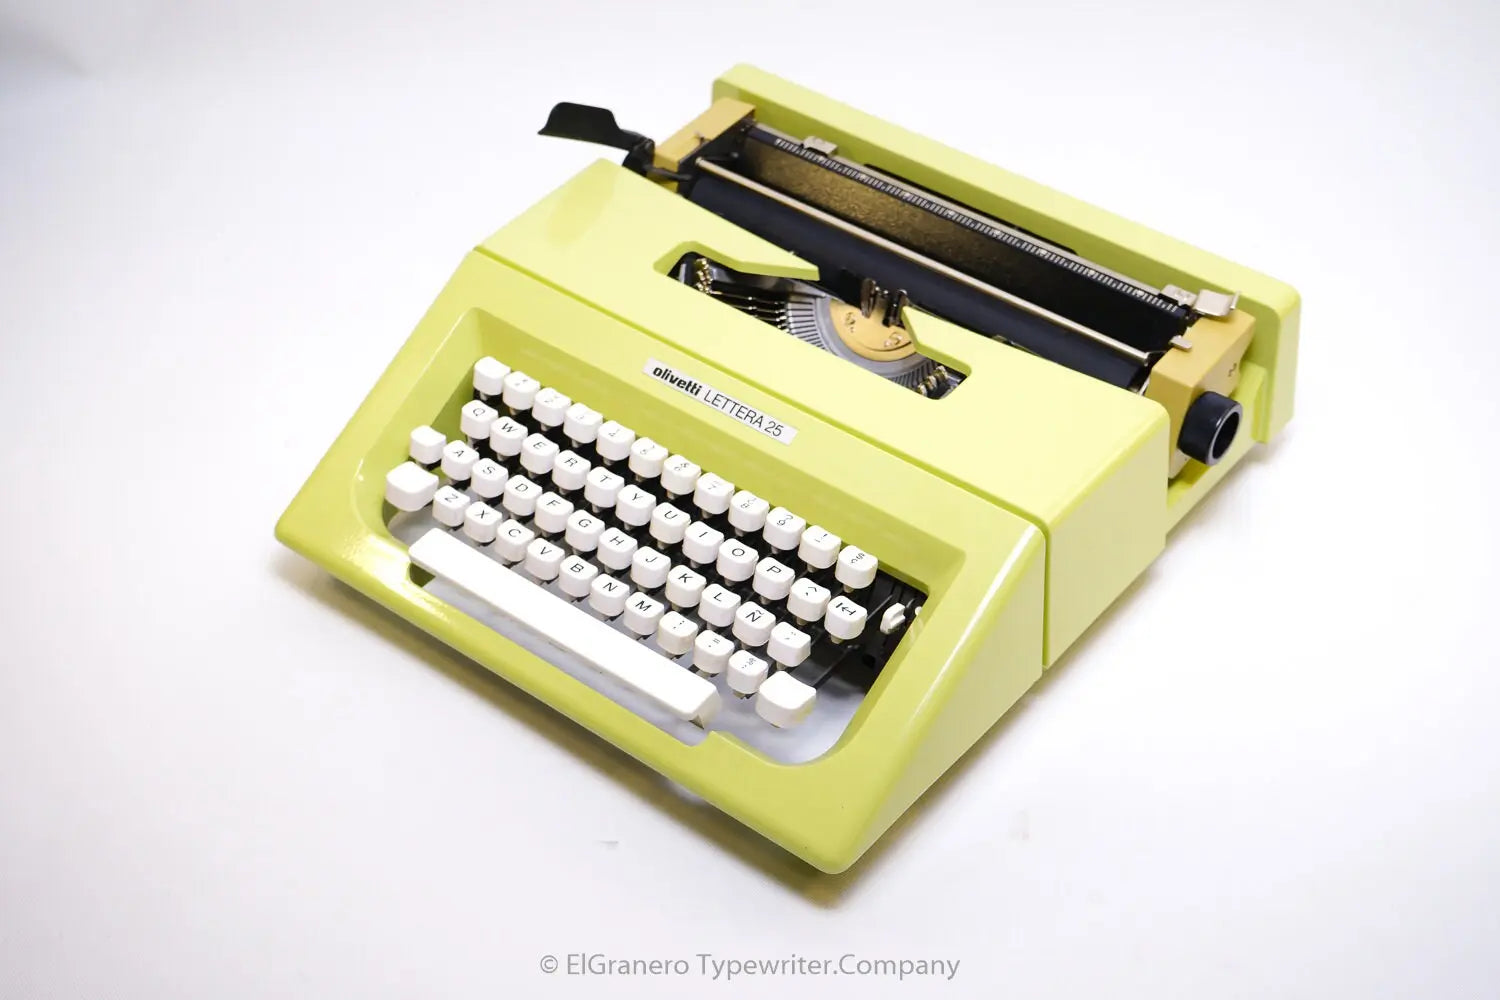 SALE! - Olivetti Lettera 25 Lime Yellow Typewriter, Vintage, Professionally Serviced - ElGranero Typewriter.Company